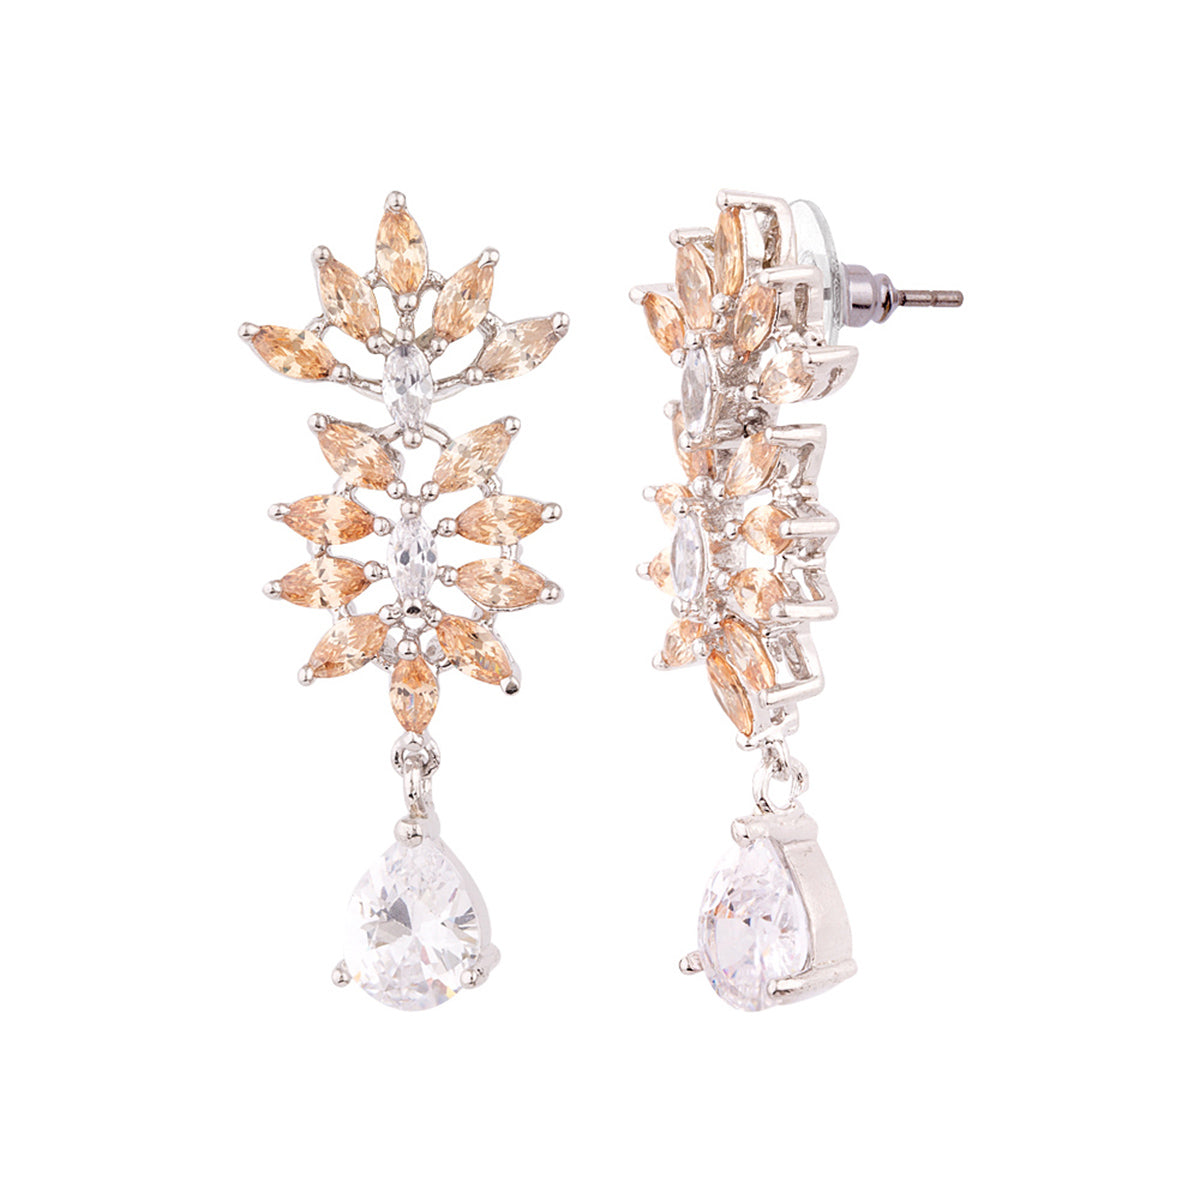 Brass Zircon Gemstones Adorned Necklace Set